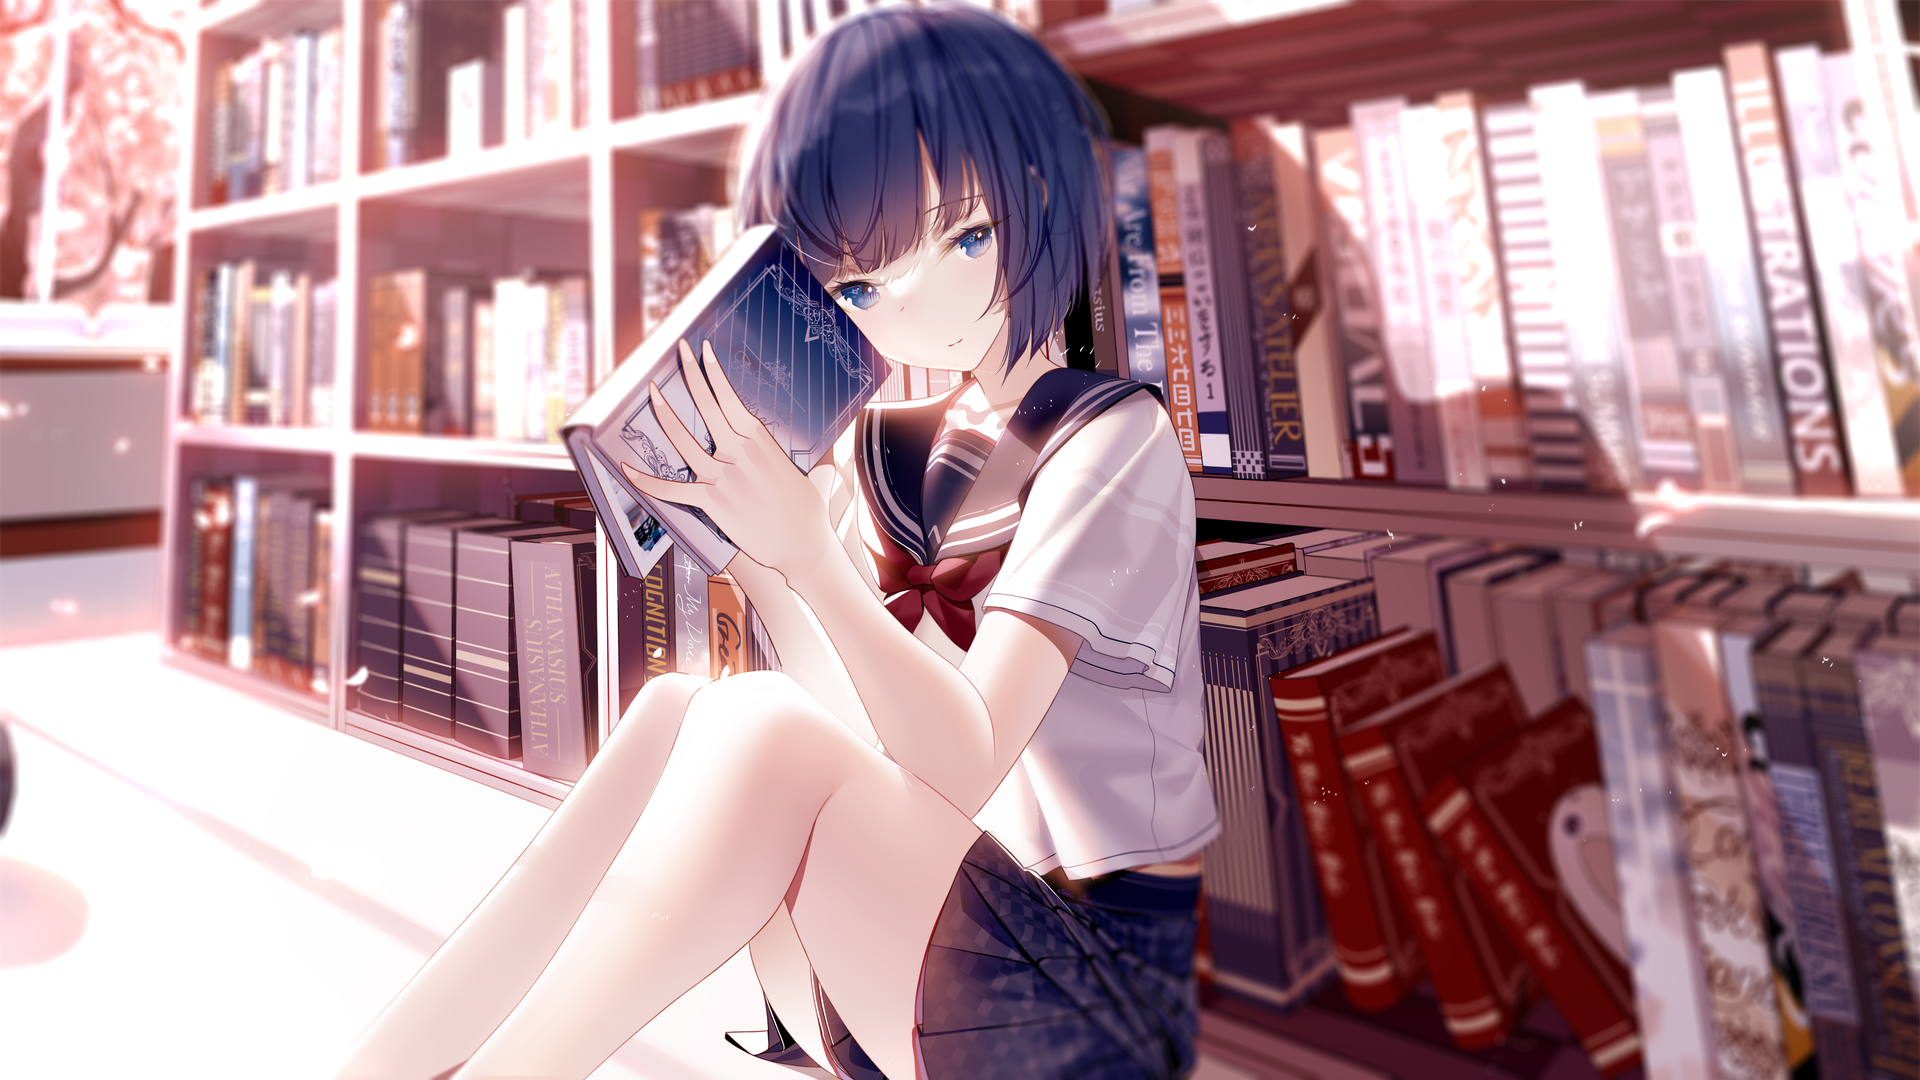 Anime Anime Girls Schoolgirl School Uniform Books Library Looking At Viewer Short Hair Petals Sunlig 1920x1080